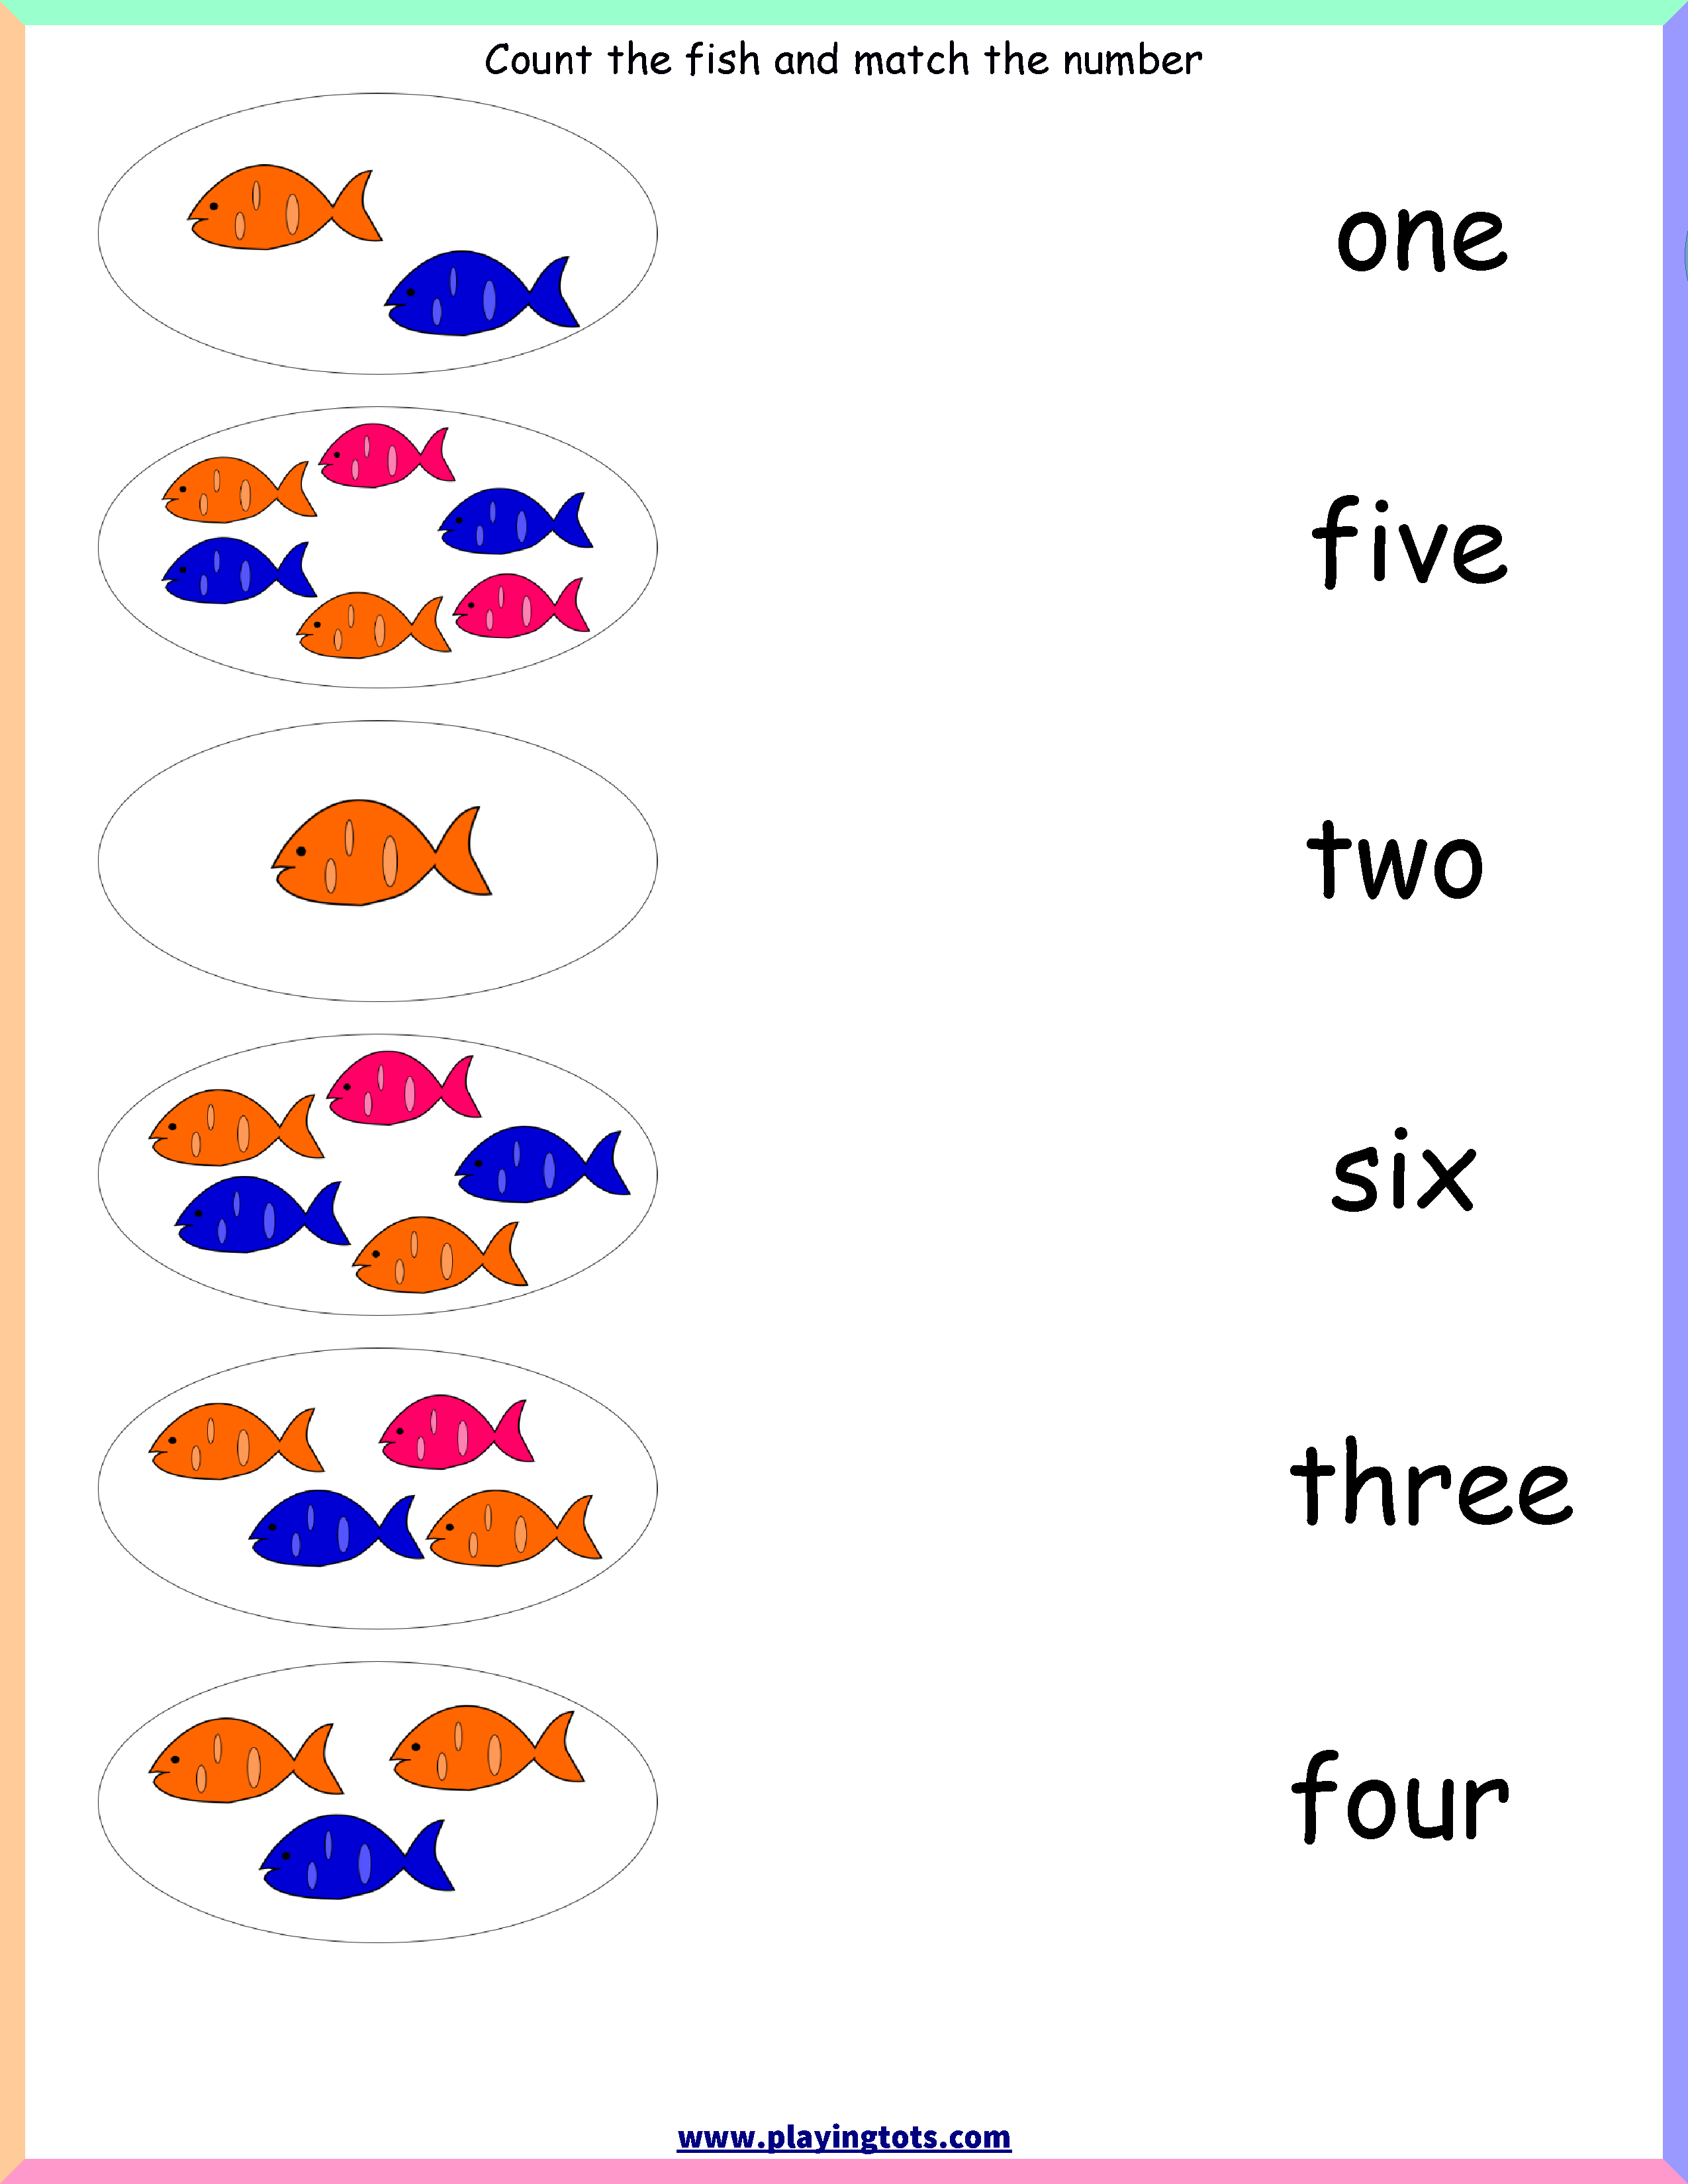 Worksheet,free,printable,count,activity,match,fish,numbers,words - Free Printable File Folders For Preschoolers